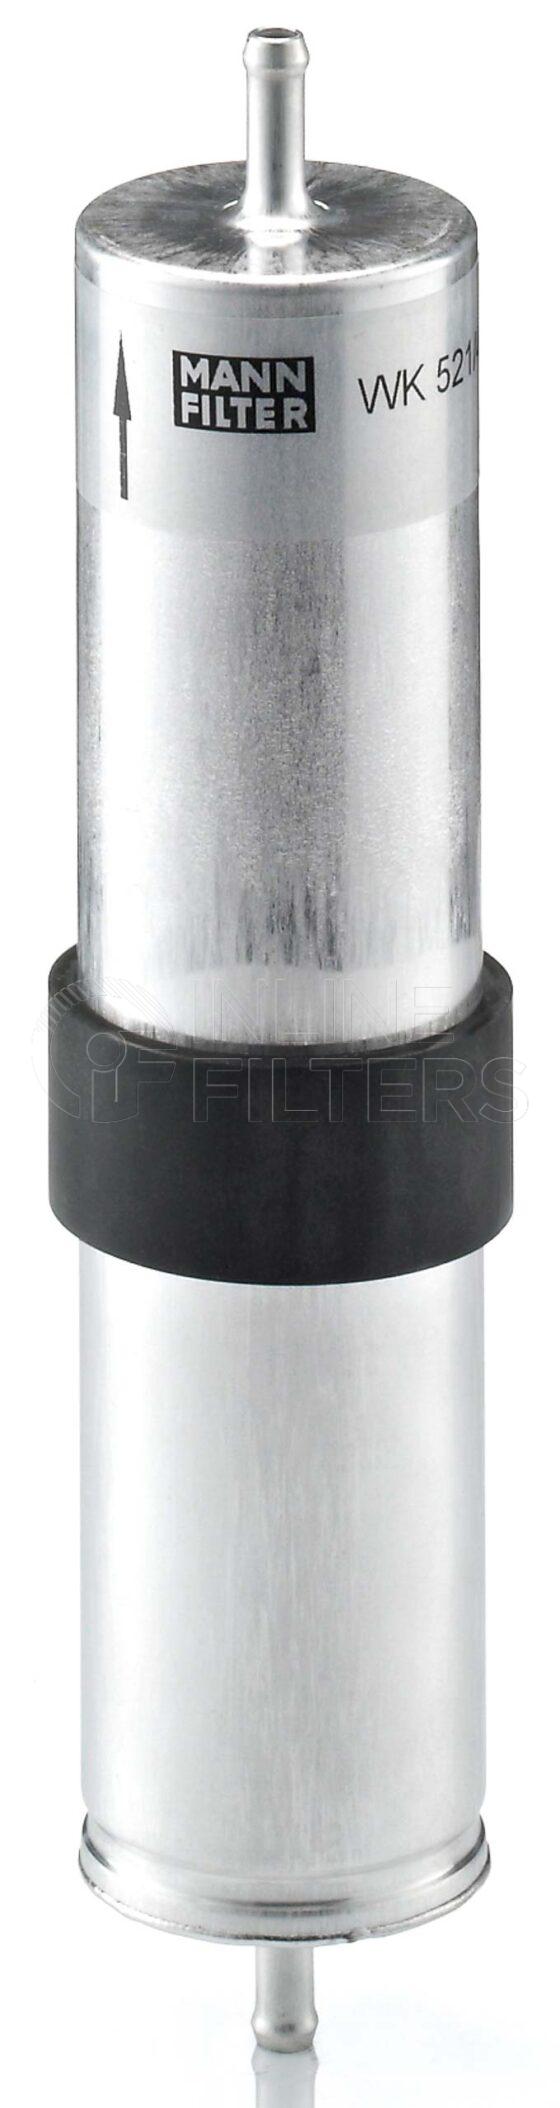 Mann WK 521/4. Filter Type: Fuel.